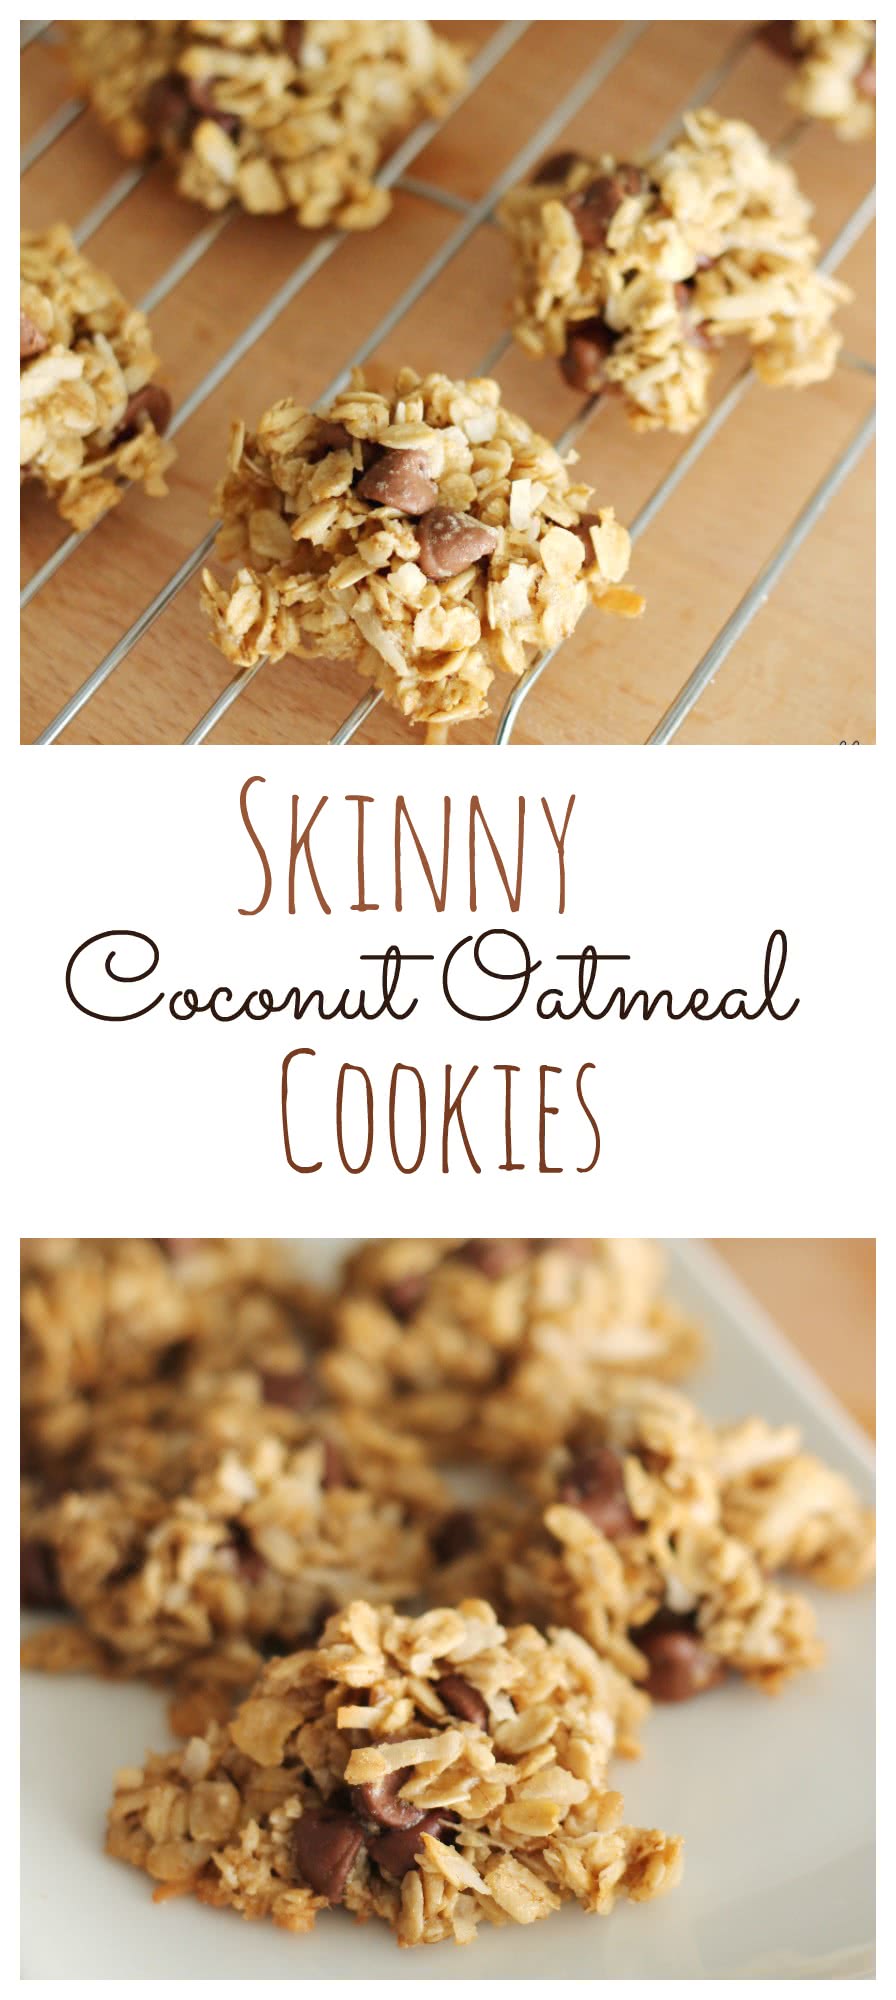 Skinny Coconut Oatmeal Cookies